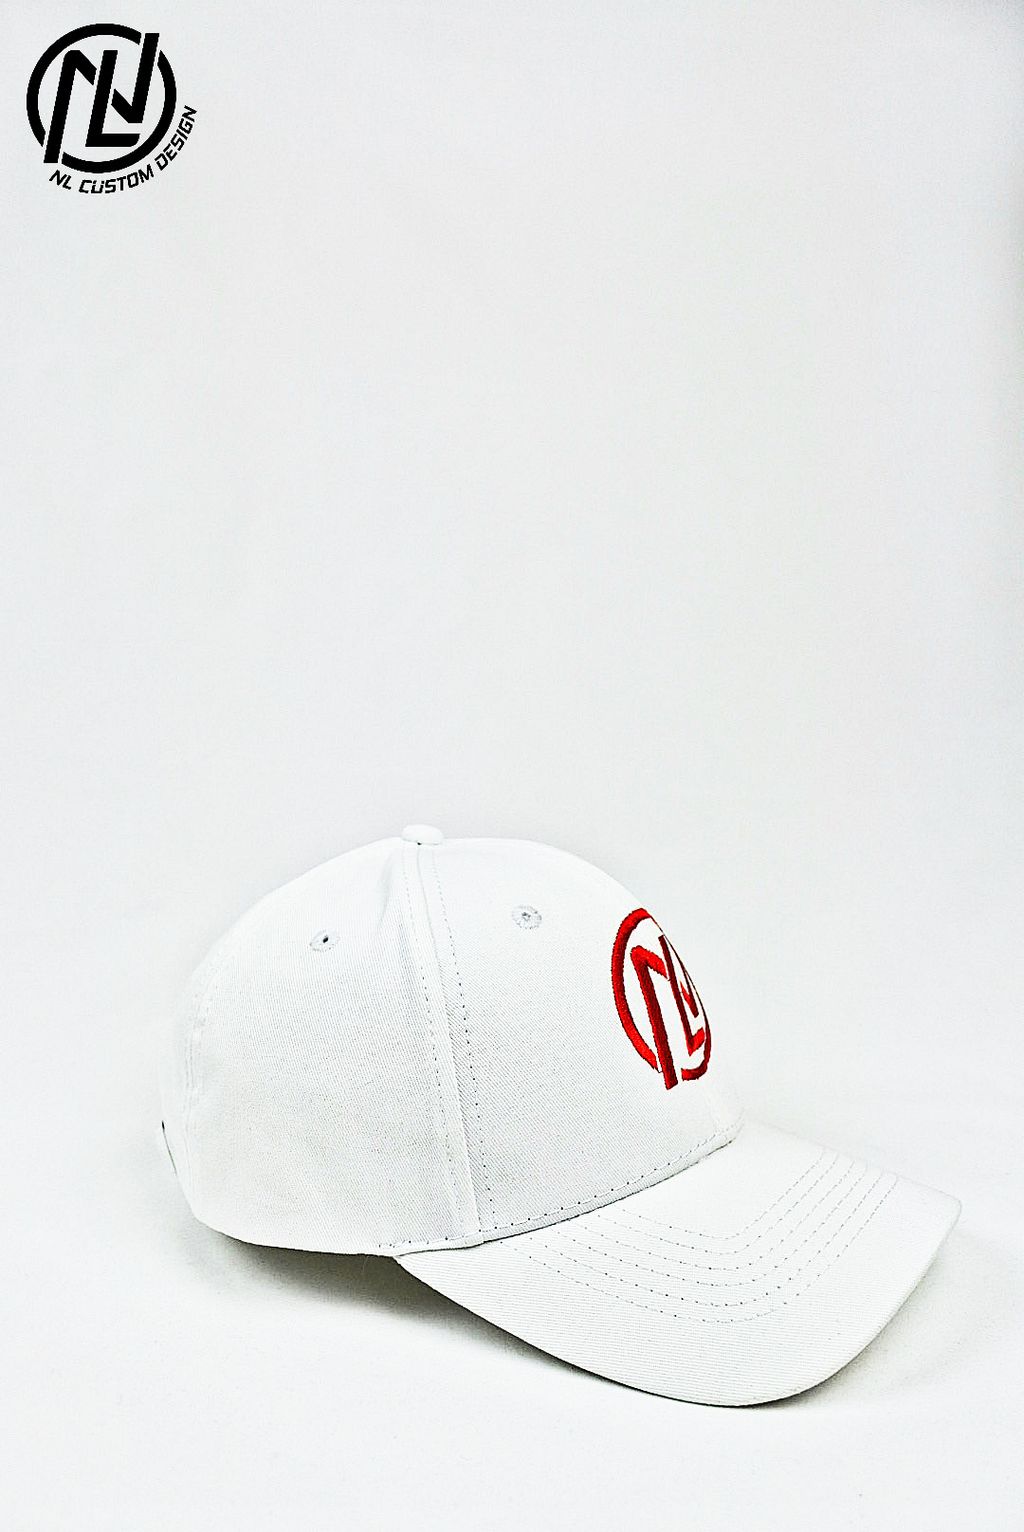 Teens Unite Shop — Cool Hat - Baseball Cap